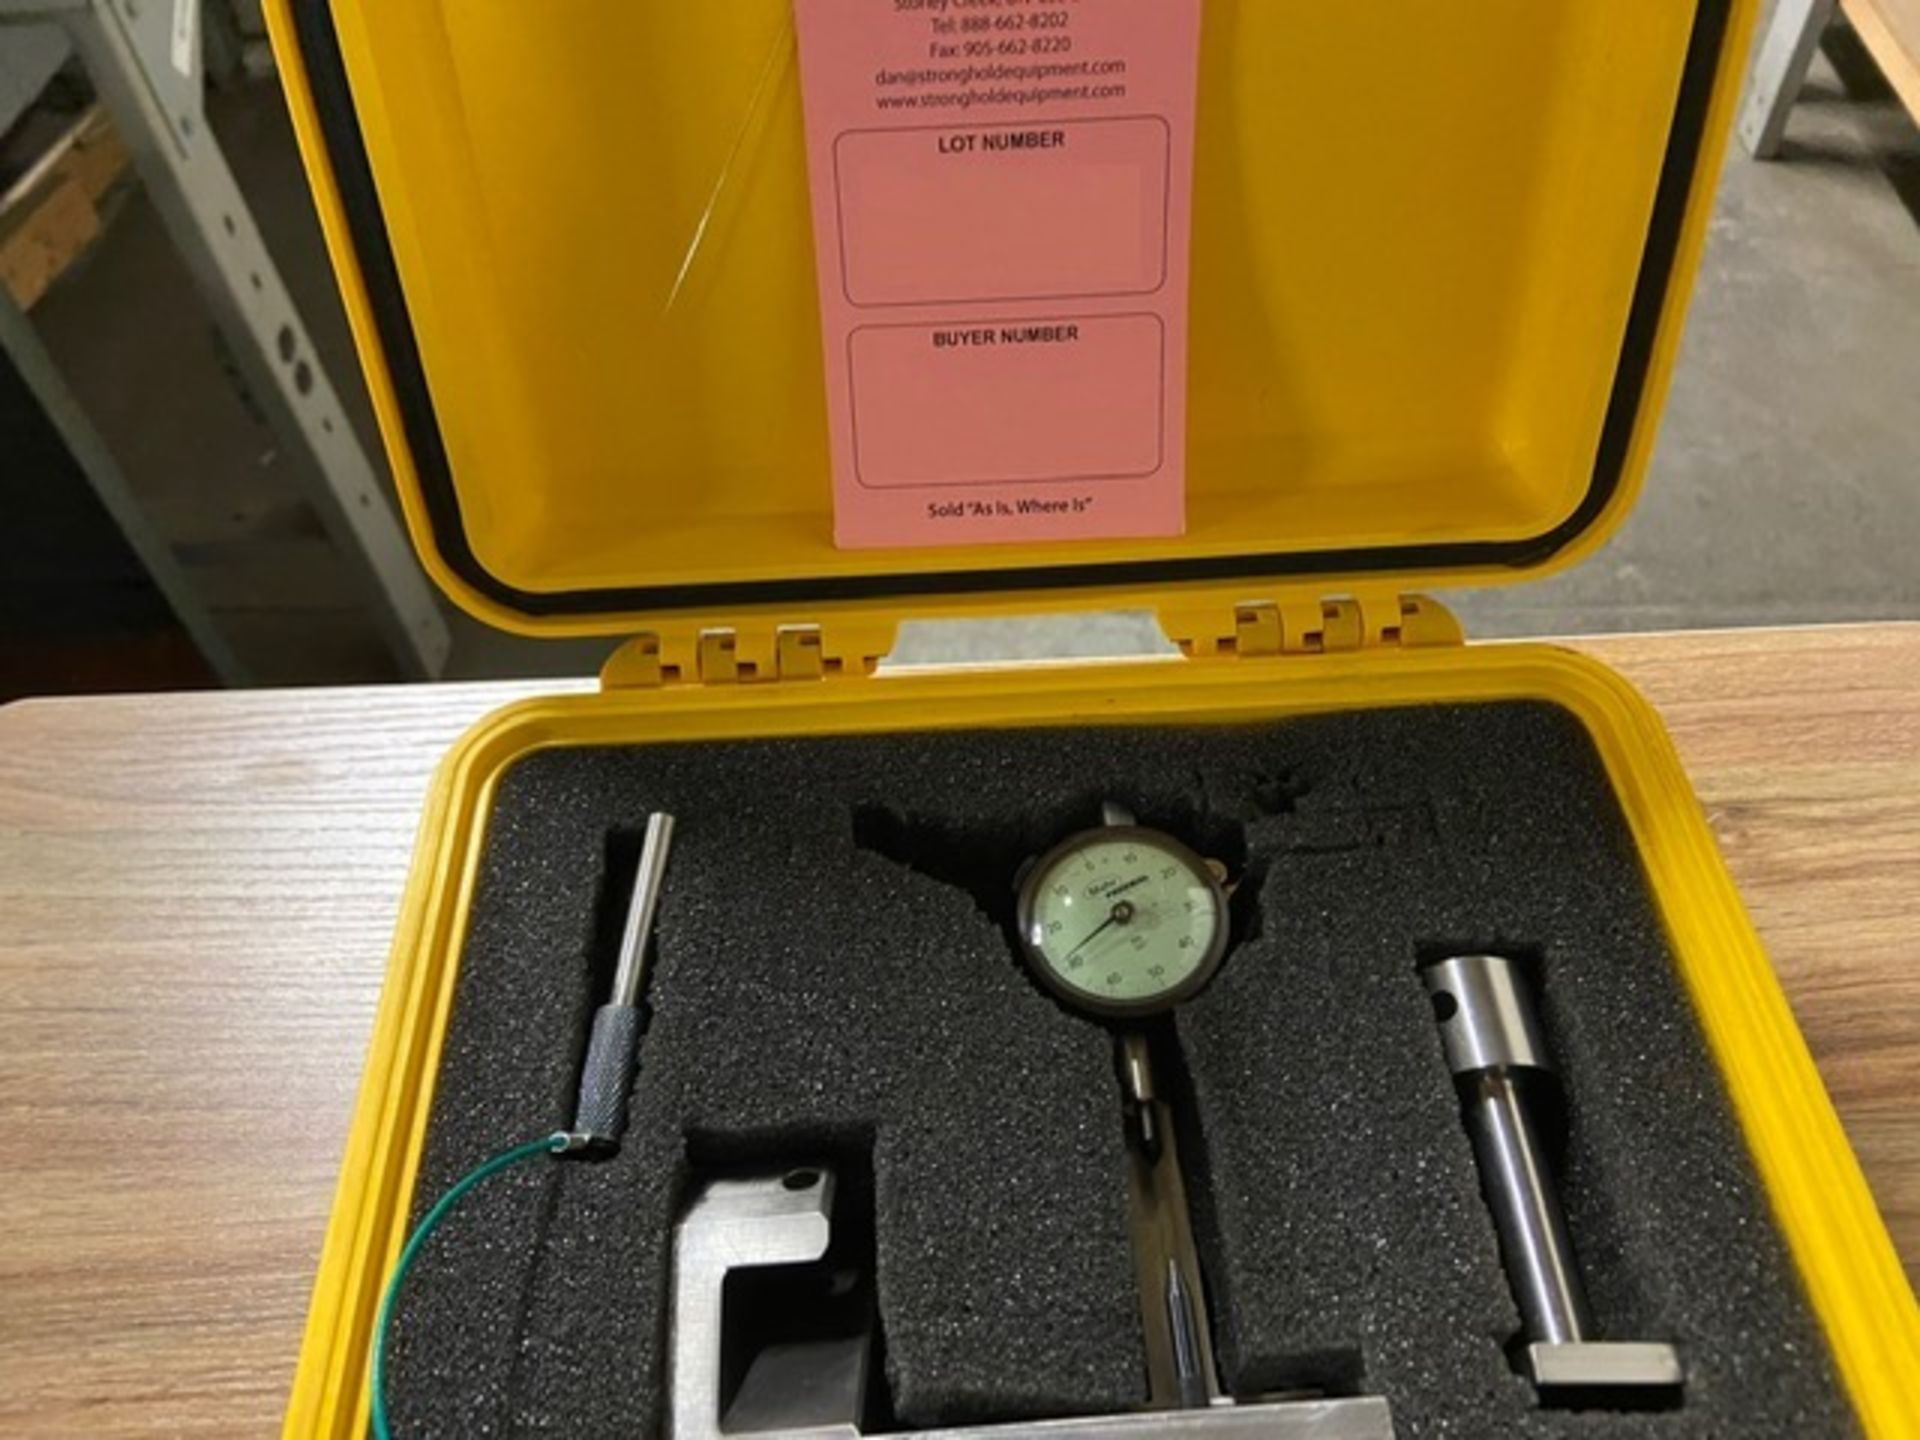 Mahr-Federal Inspection Kit